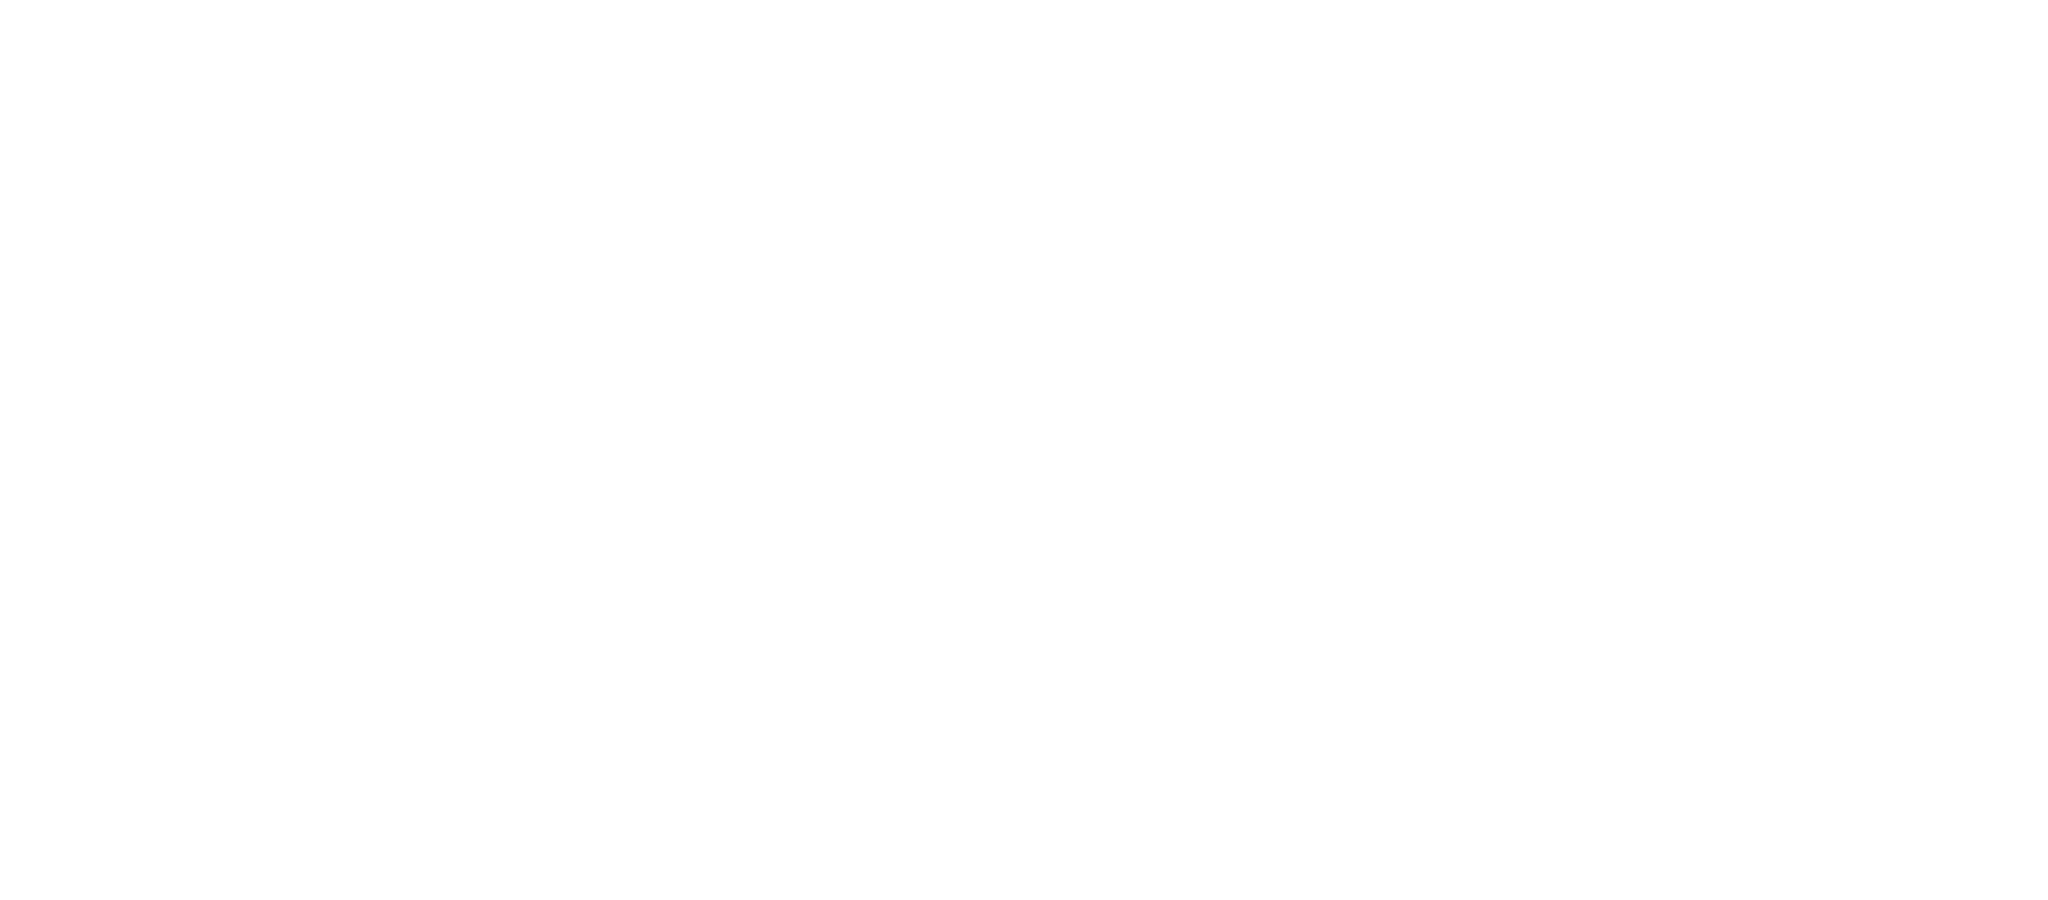 Star Wars Galactic Starcruiser at Walt Disney World Resort in Orlando, Florida